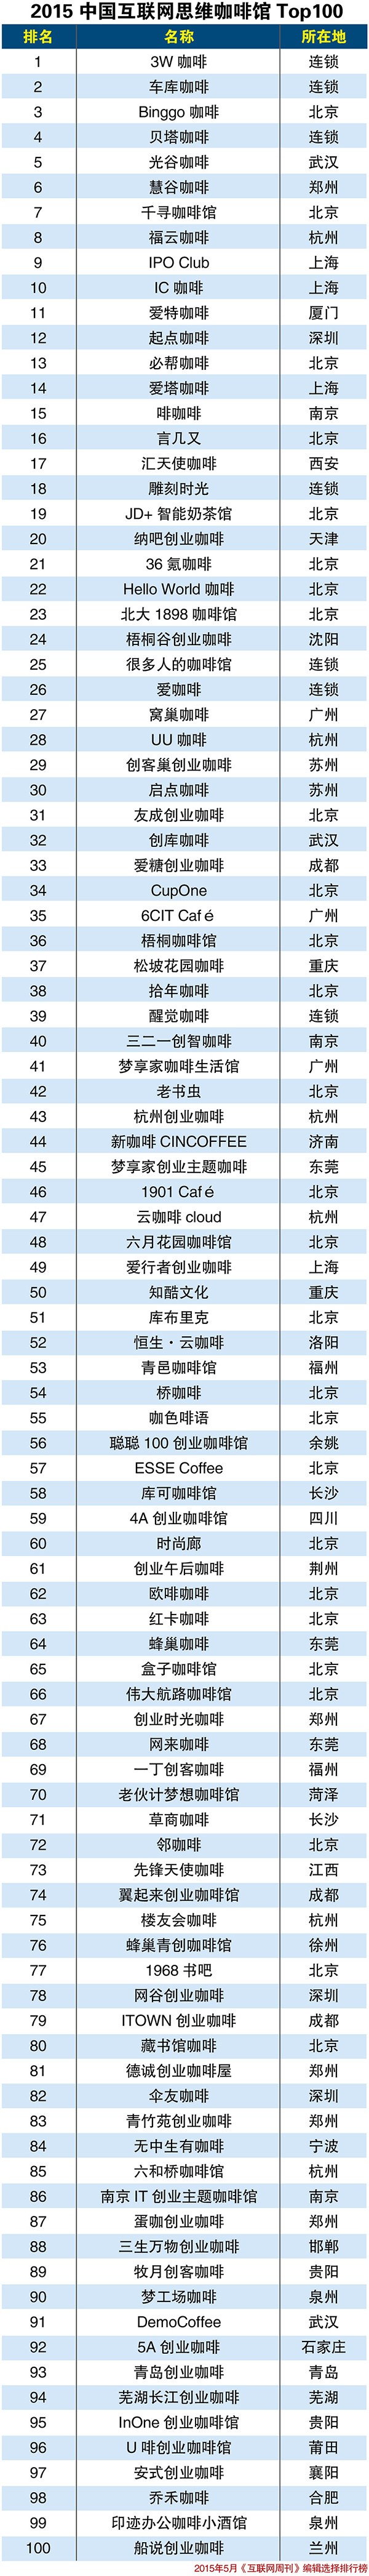 2015 China Internet thinking Cafe ranking Top100